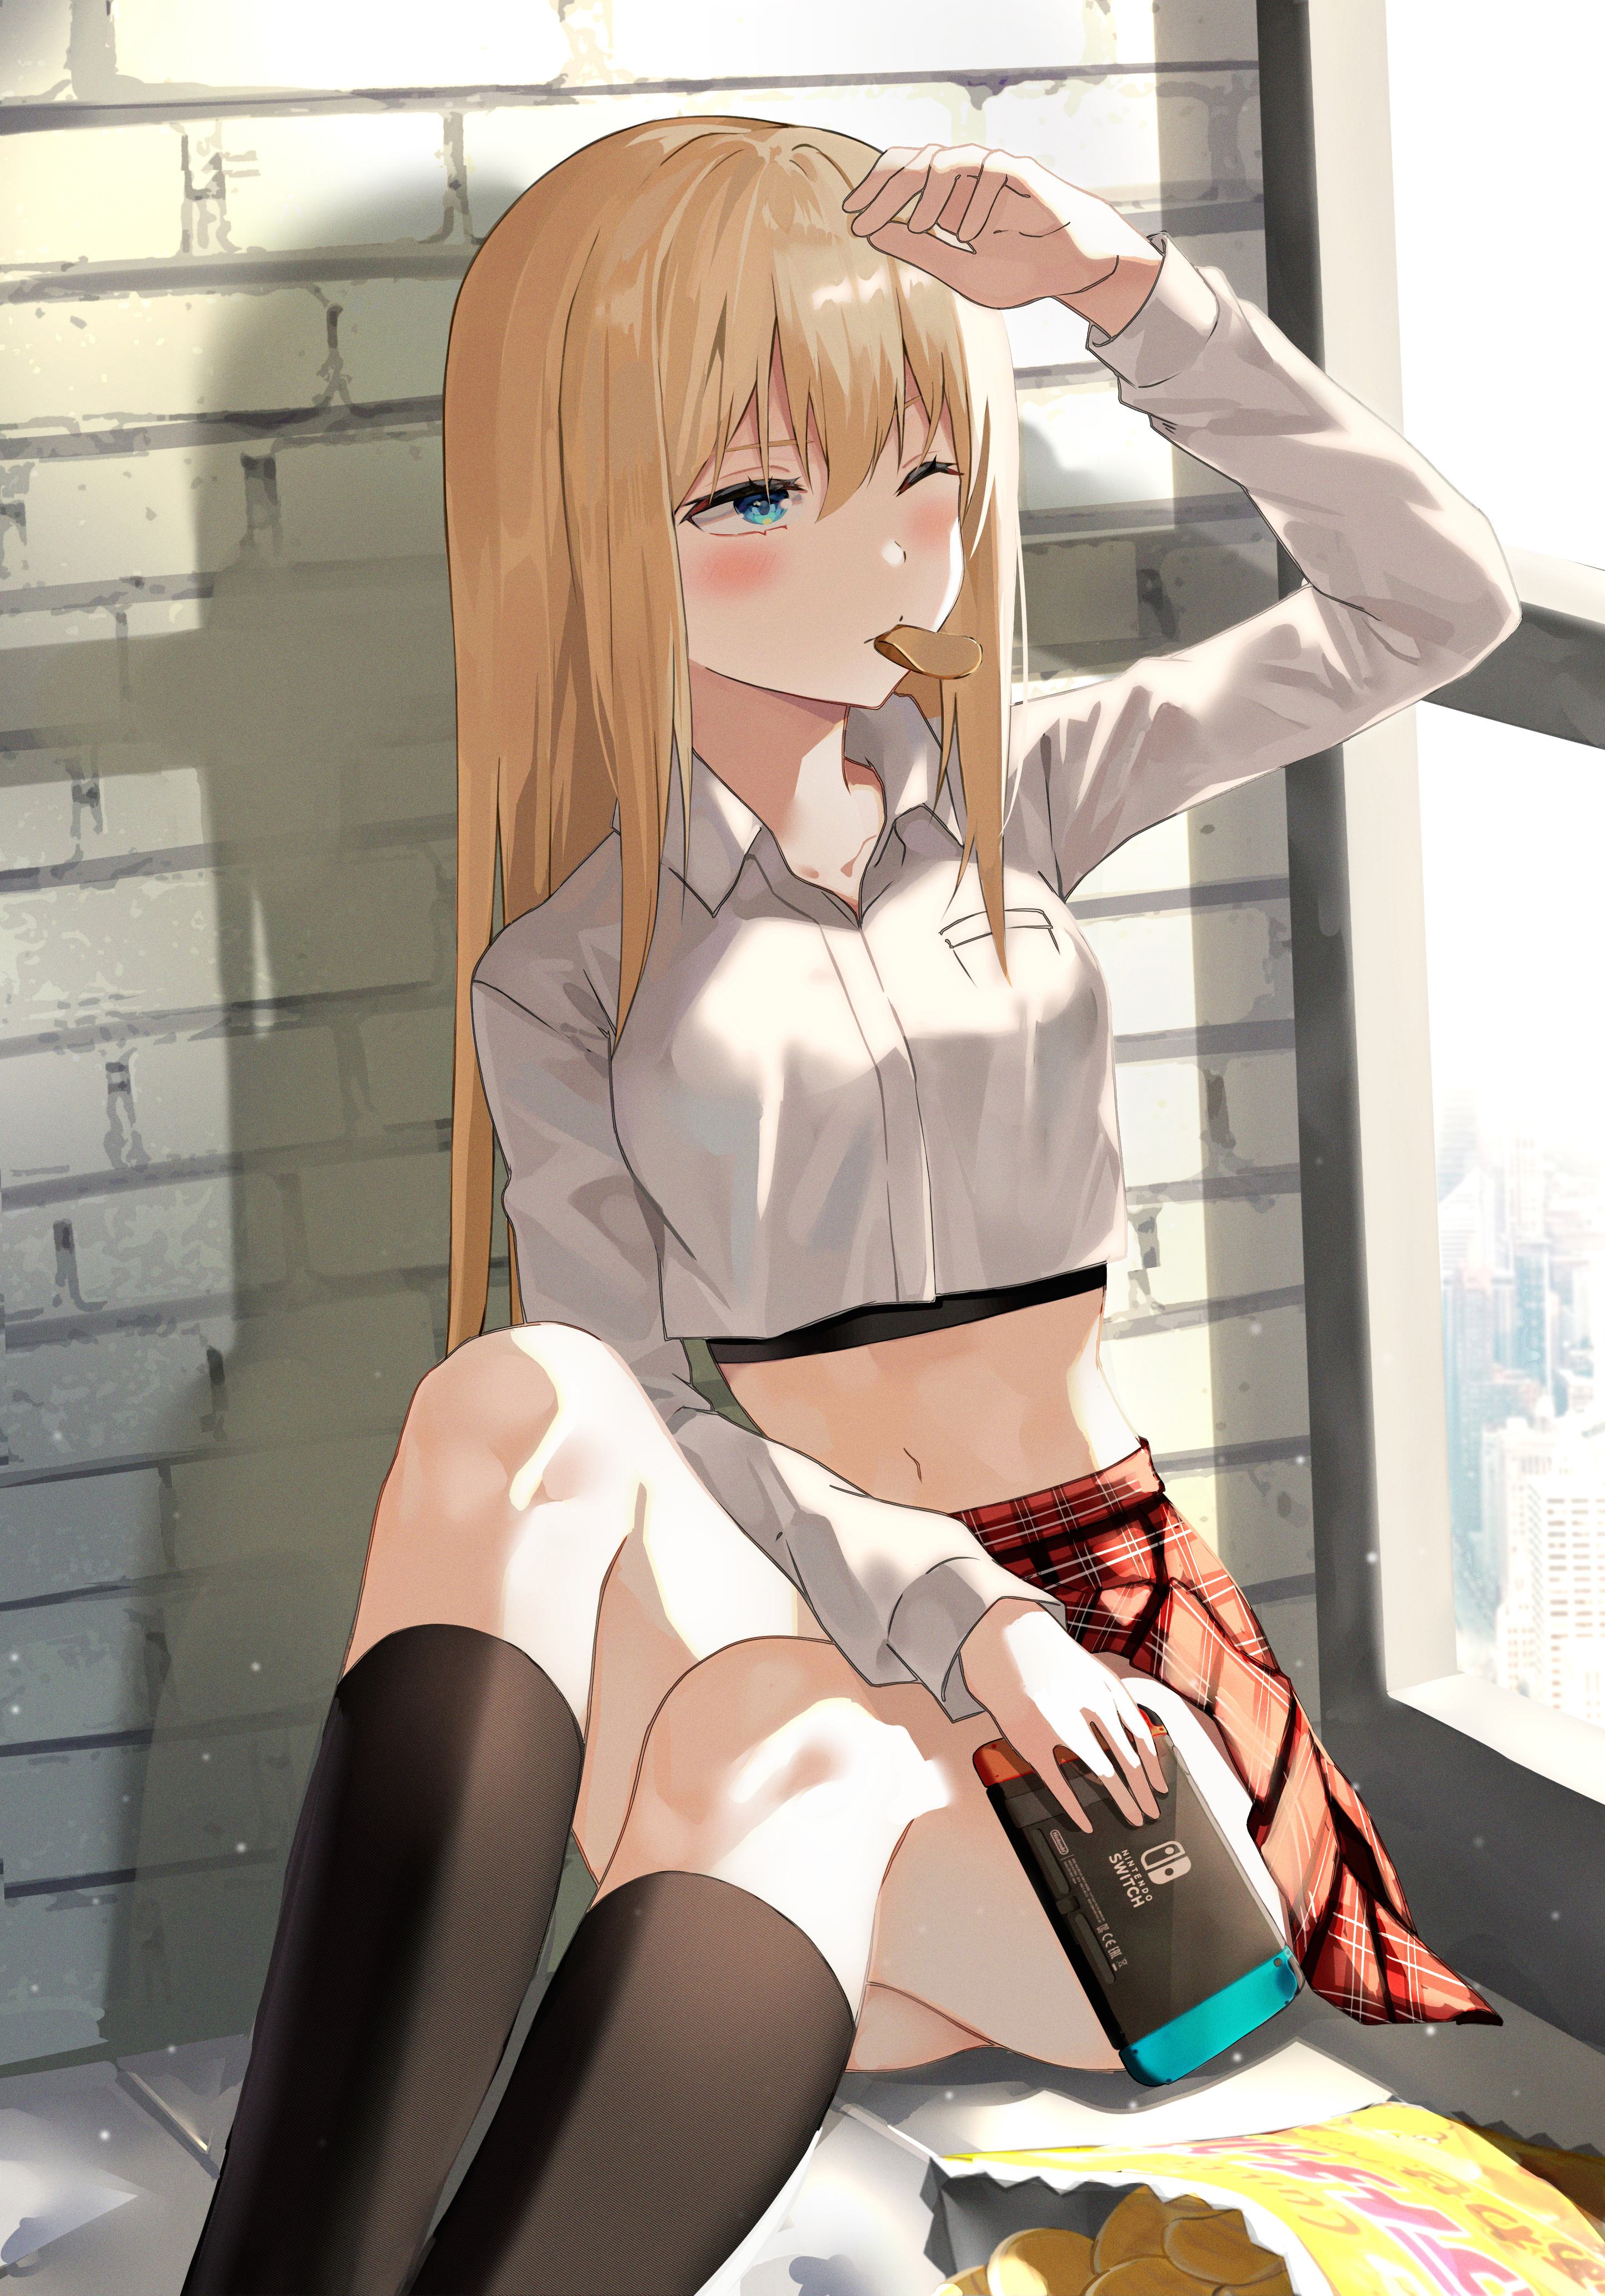 Anime Anime Girls Digital Digital Art 2D Artwork Blonde Looking Away Blocking View Knee High Socks C 2896x4143